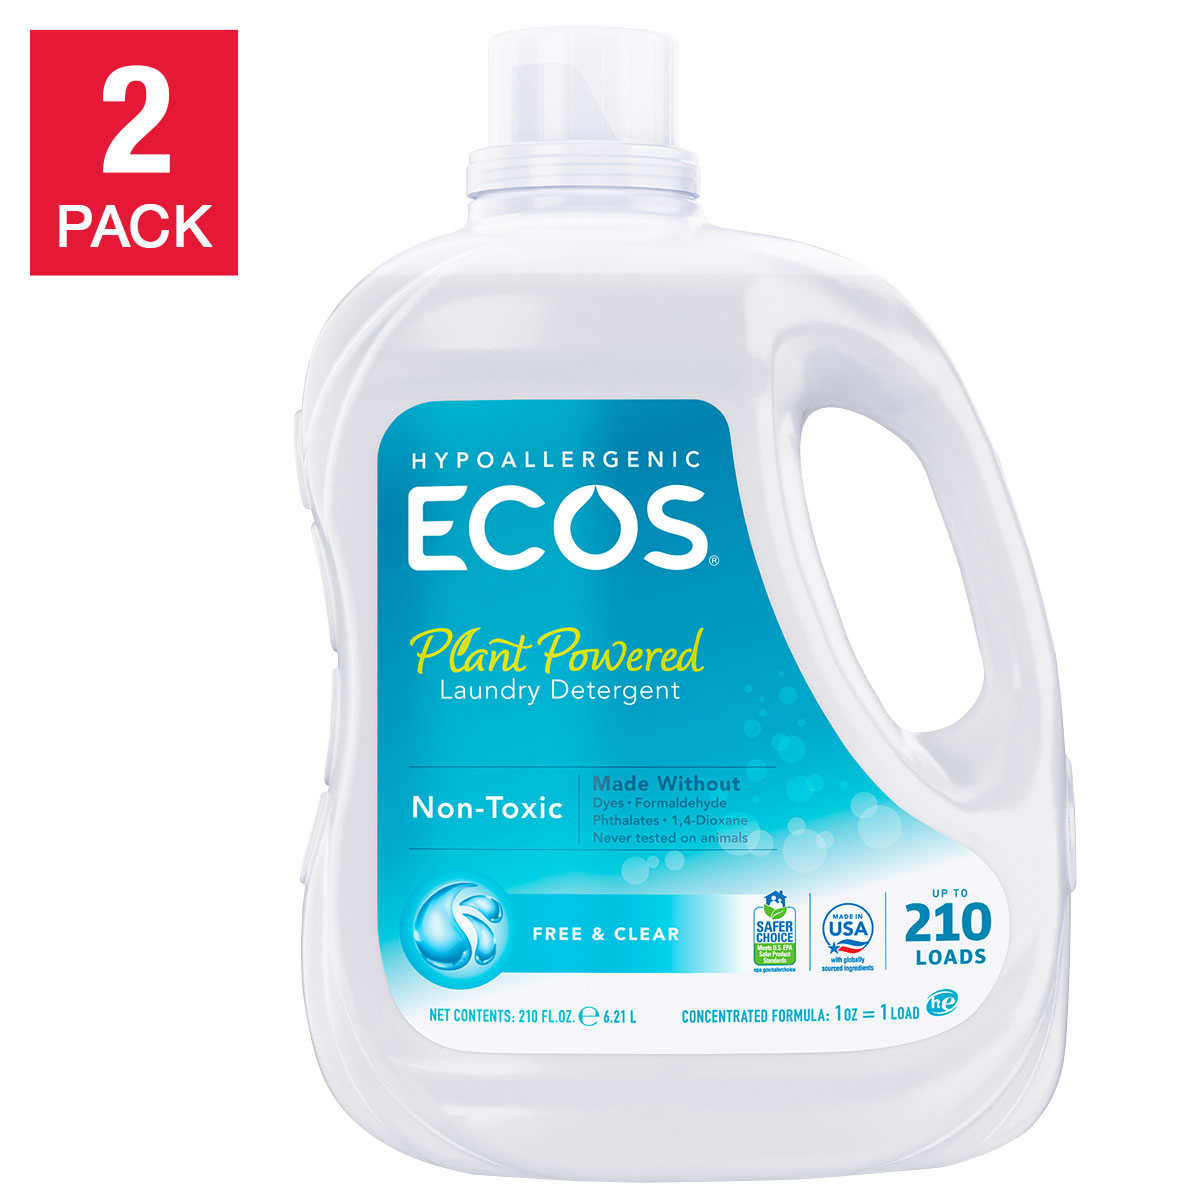 ECOS HE Liquid Laundry Detergent, Free & Clear, 210 loads, 210 fl oz, 2-count